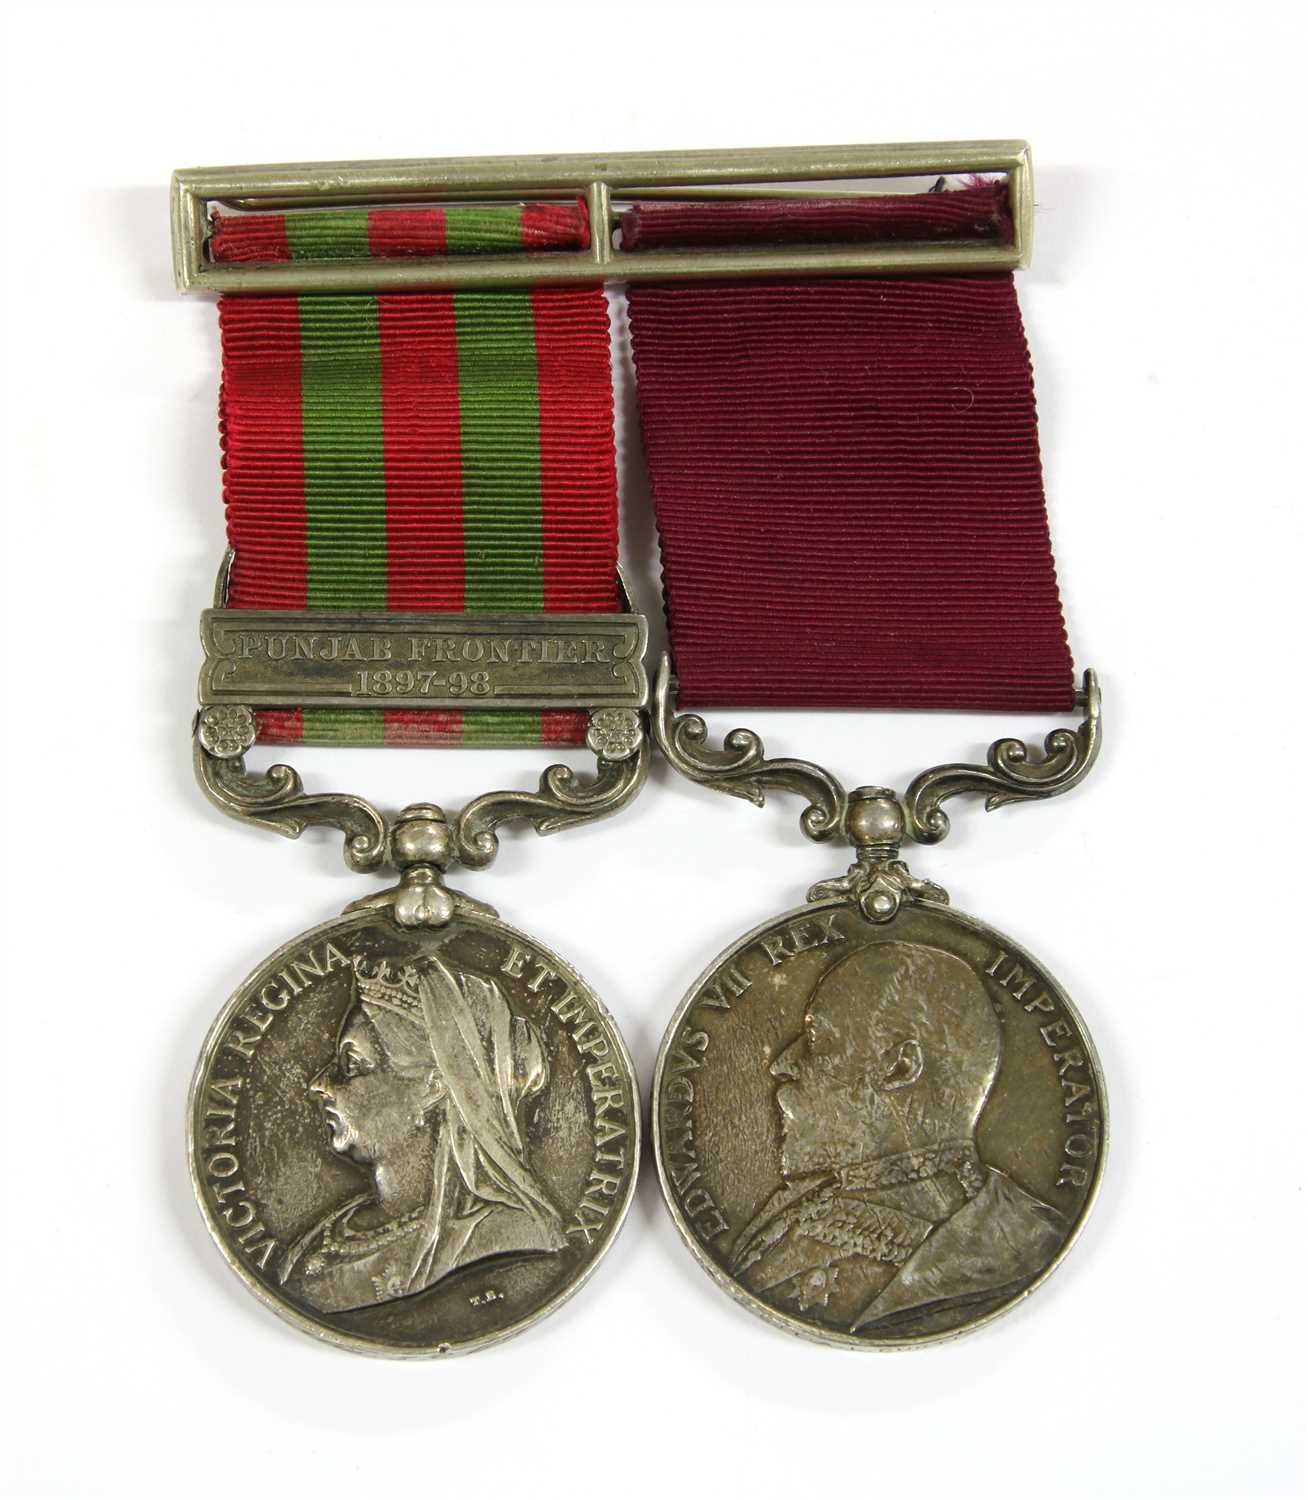 Lot 68 - A Victorian India 1895 medal